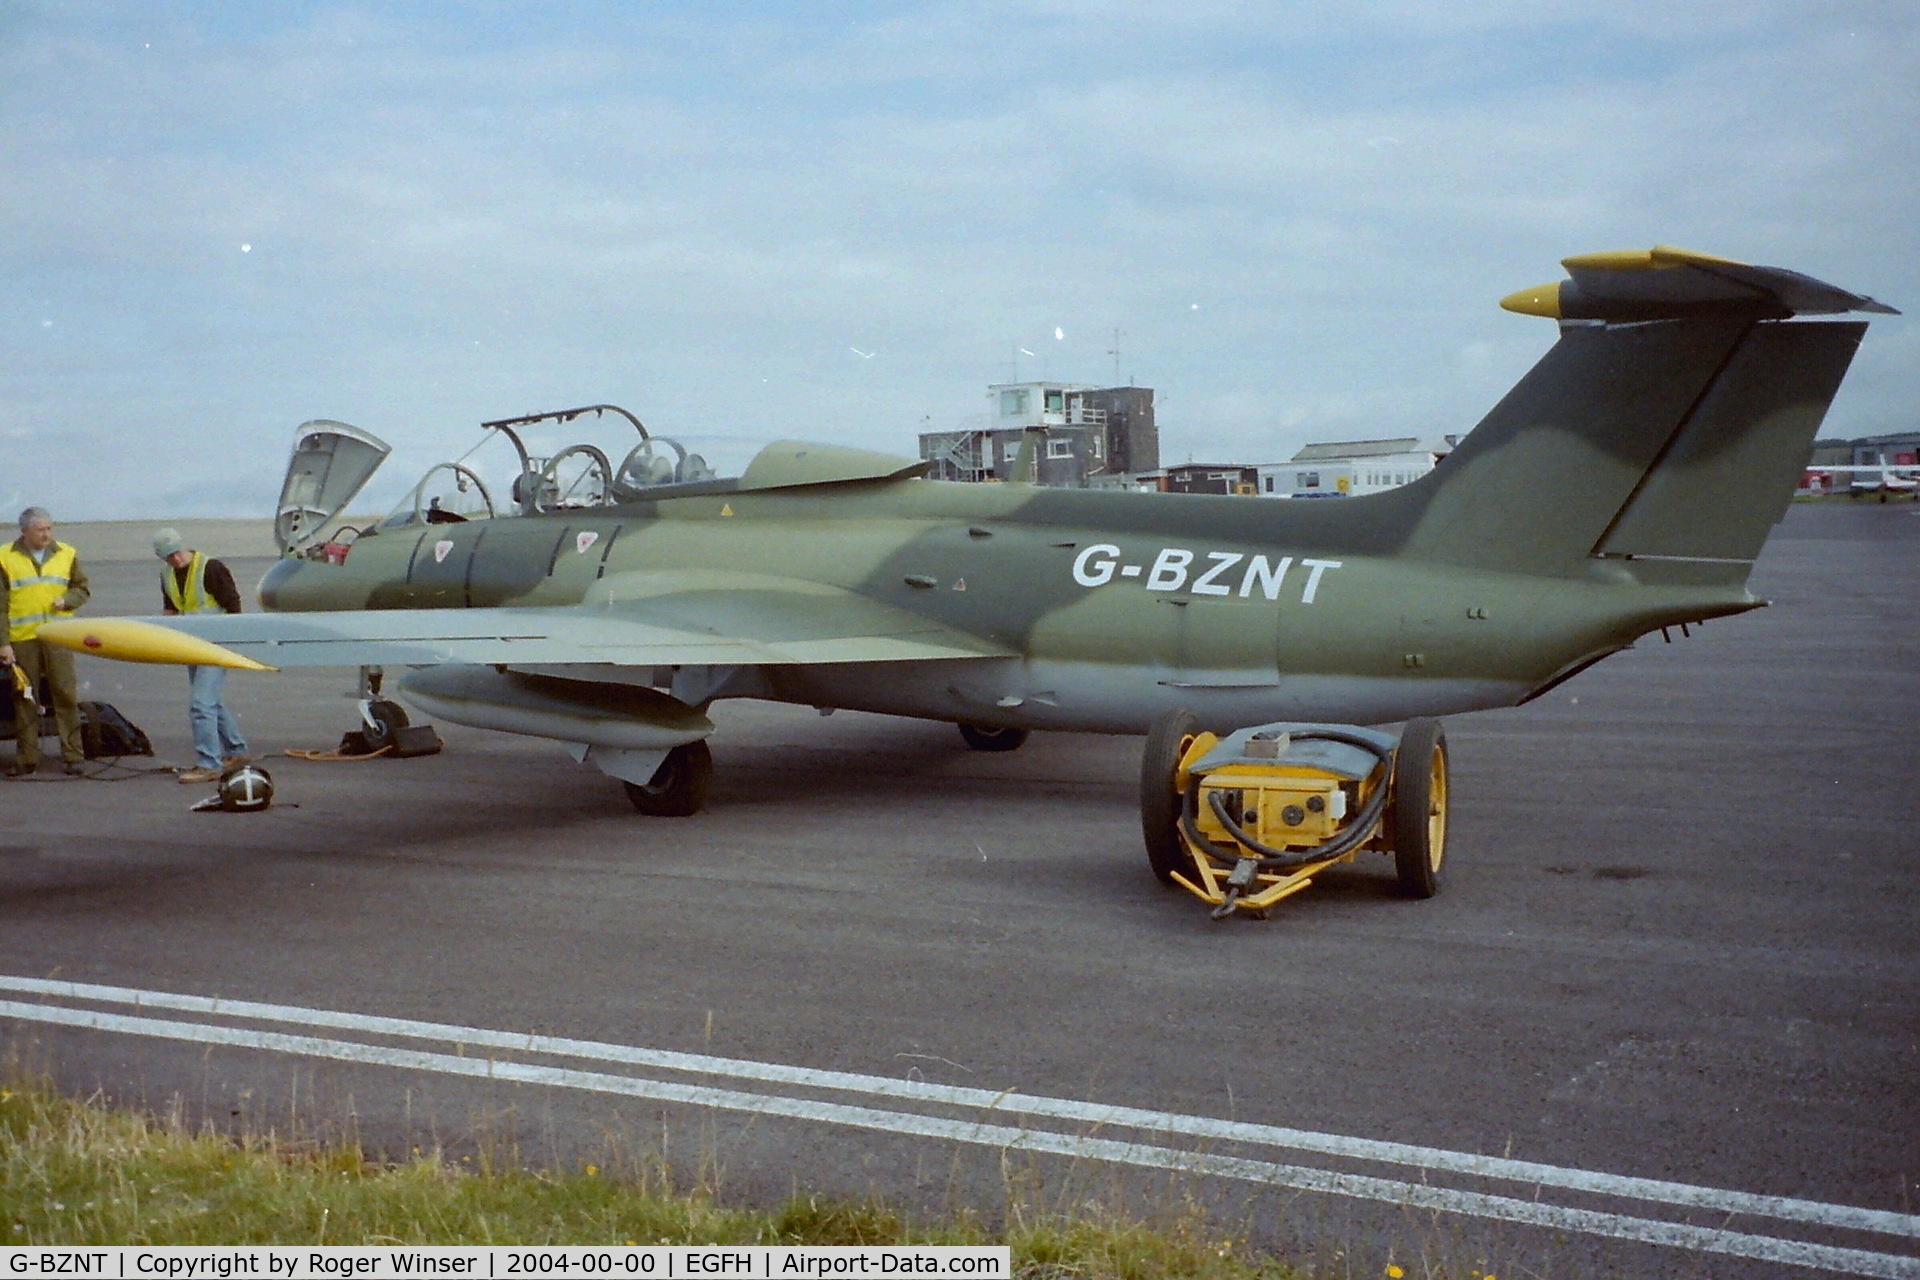 G-BZNT, 1968 Aero L-29 Delfin C/N 893019, Based at Swansea Airport in summer 2004